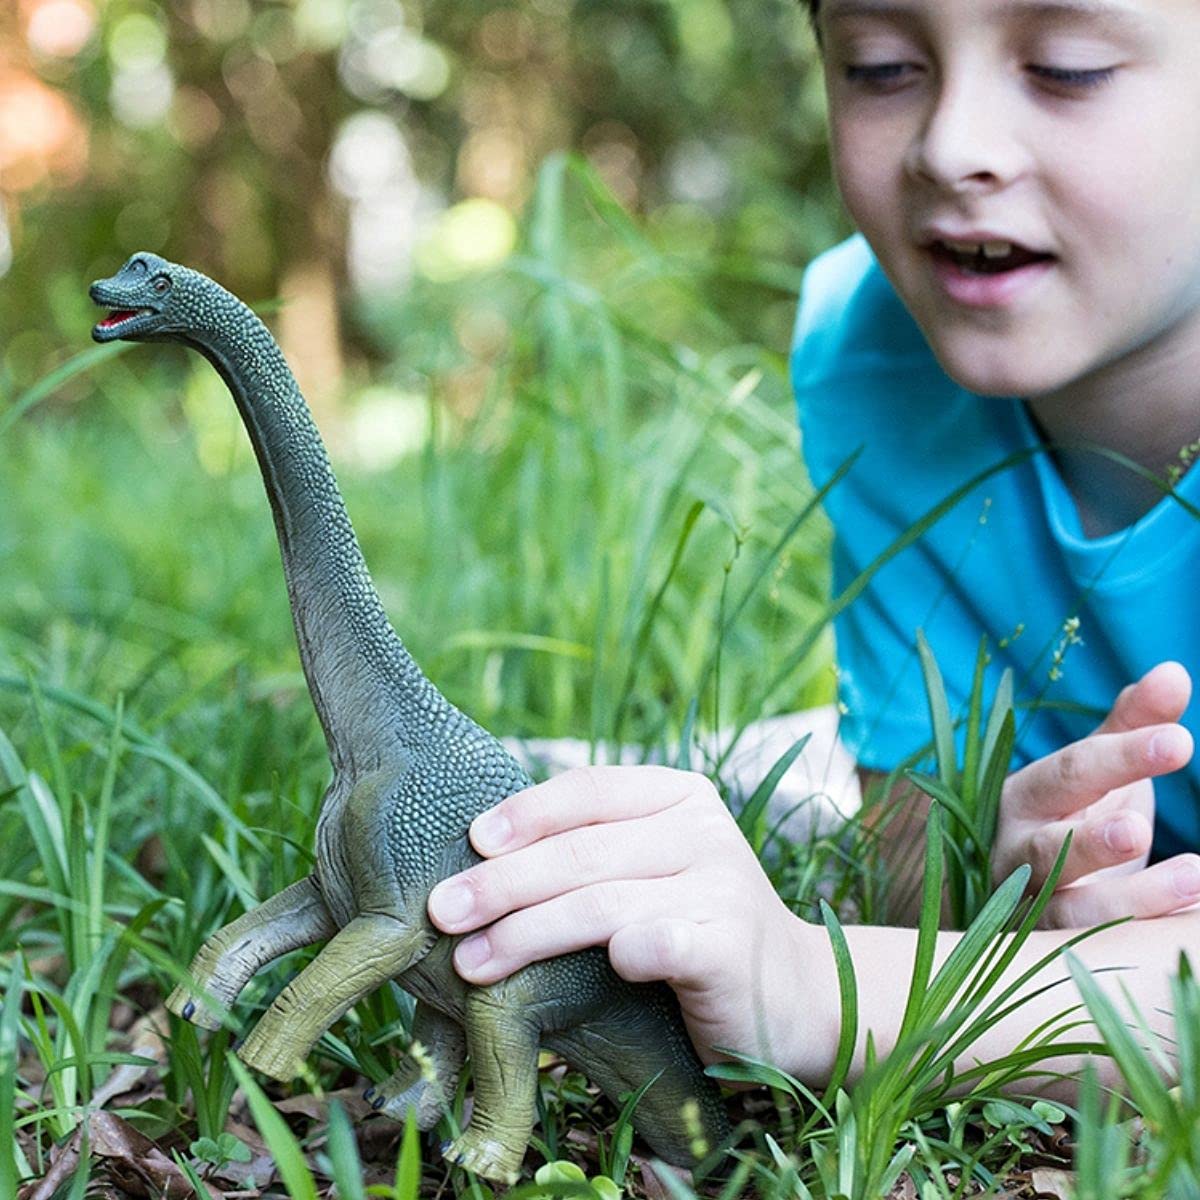 Schleich Dinosaurs, Dinosaur Toy, Dinosaur Toys for Boys and Girls 4-12 Years Old, Brachiosaurus , Green